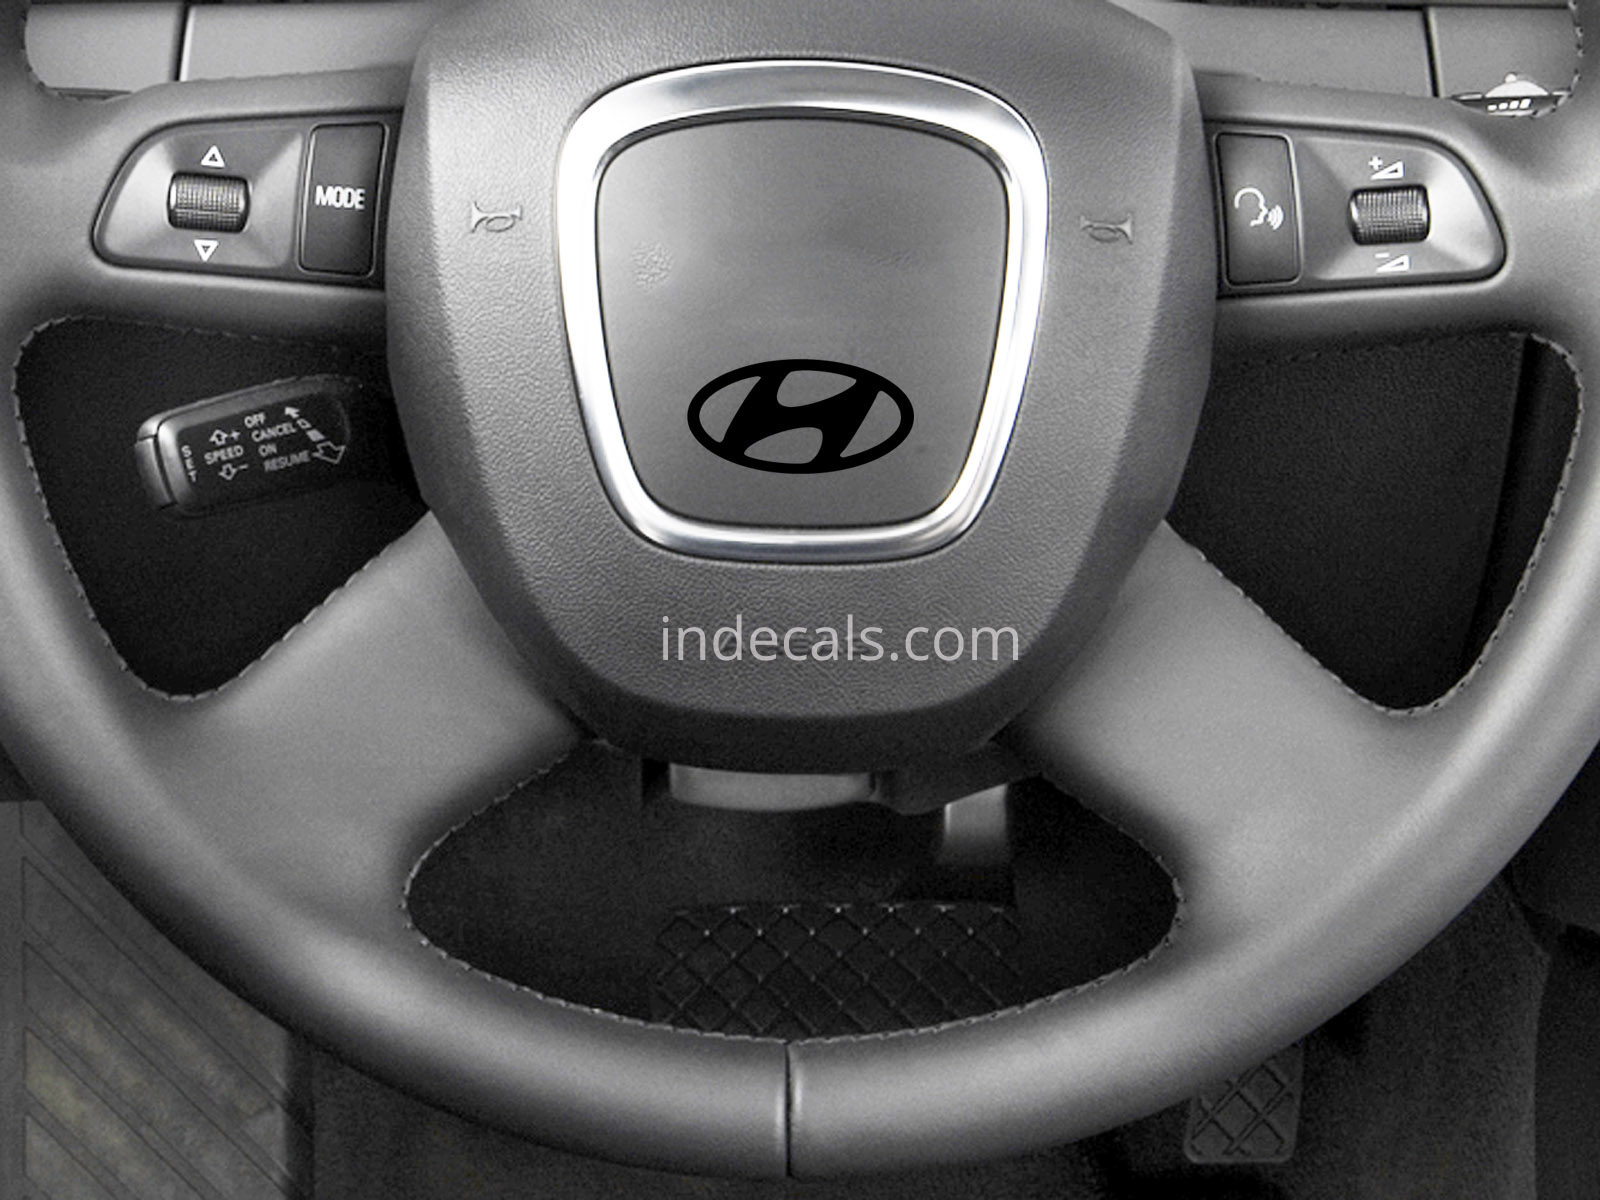 3 x Hyundai Stickers for Steering Wheel - Black